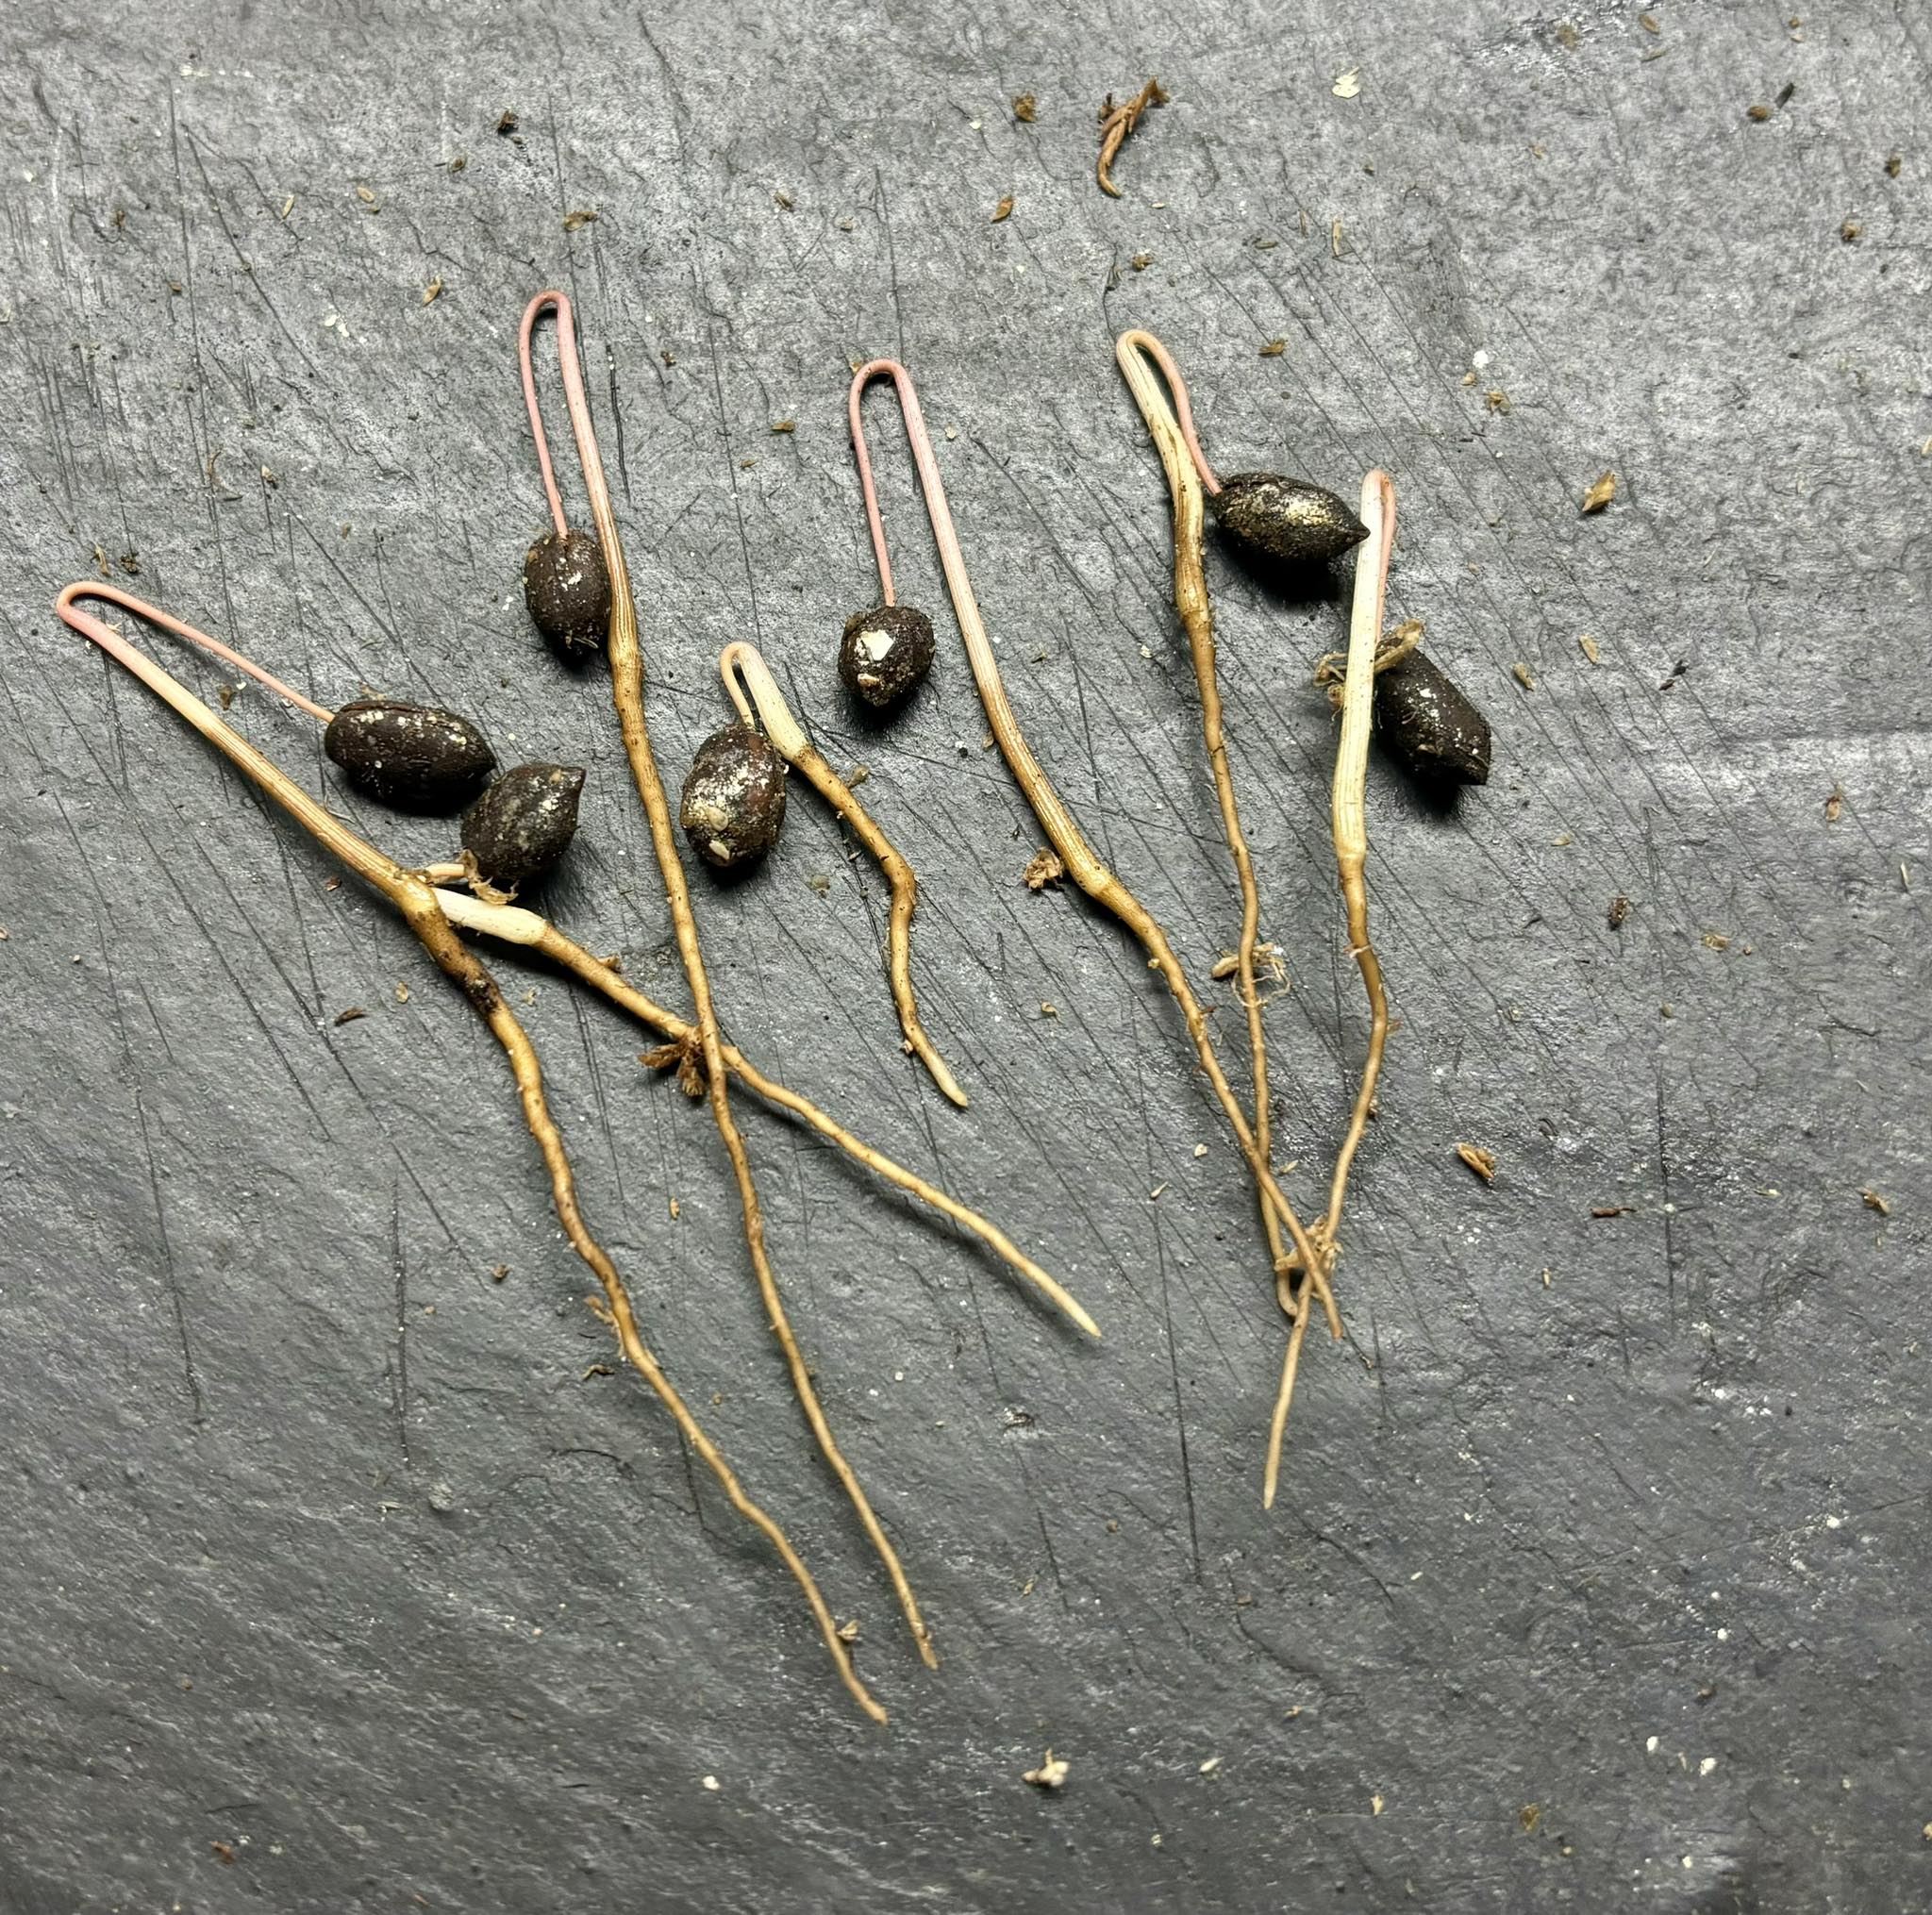 Duguetia lanceolata - Pindaiba - 1 germinated seed / 1 gekeimter Samen